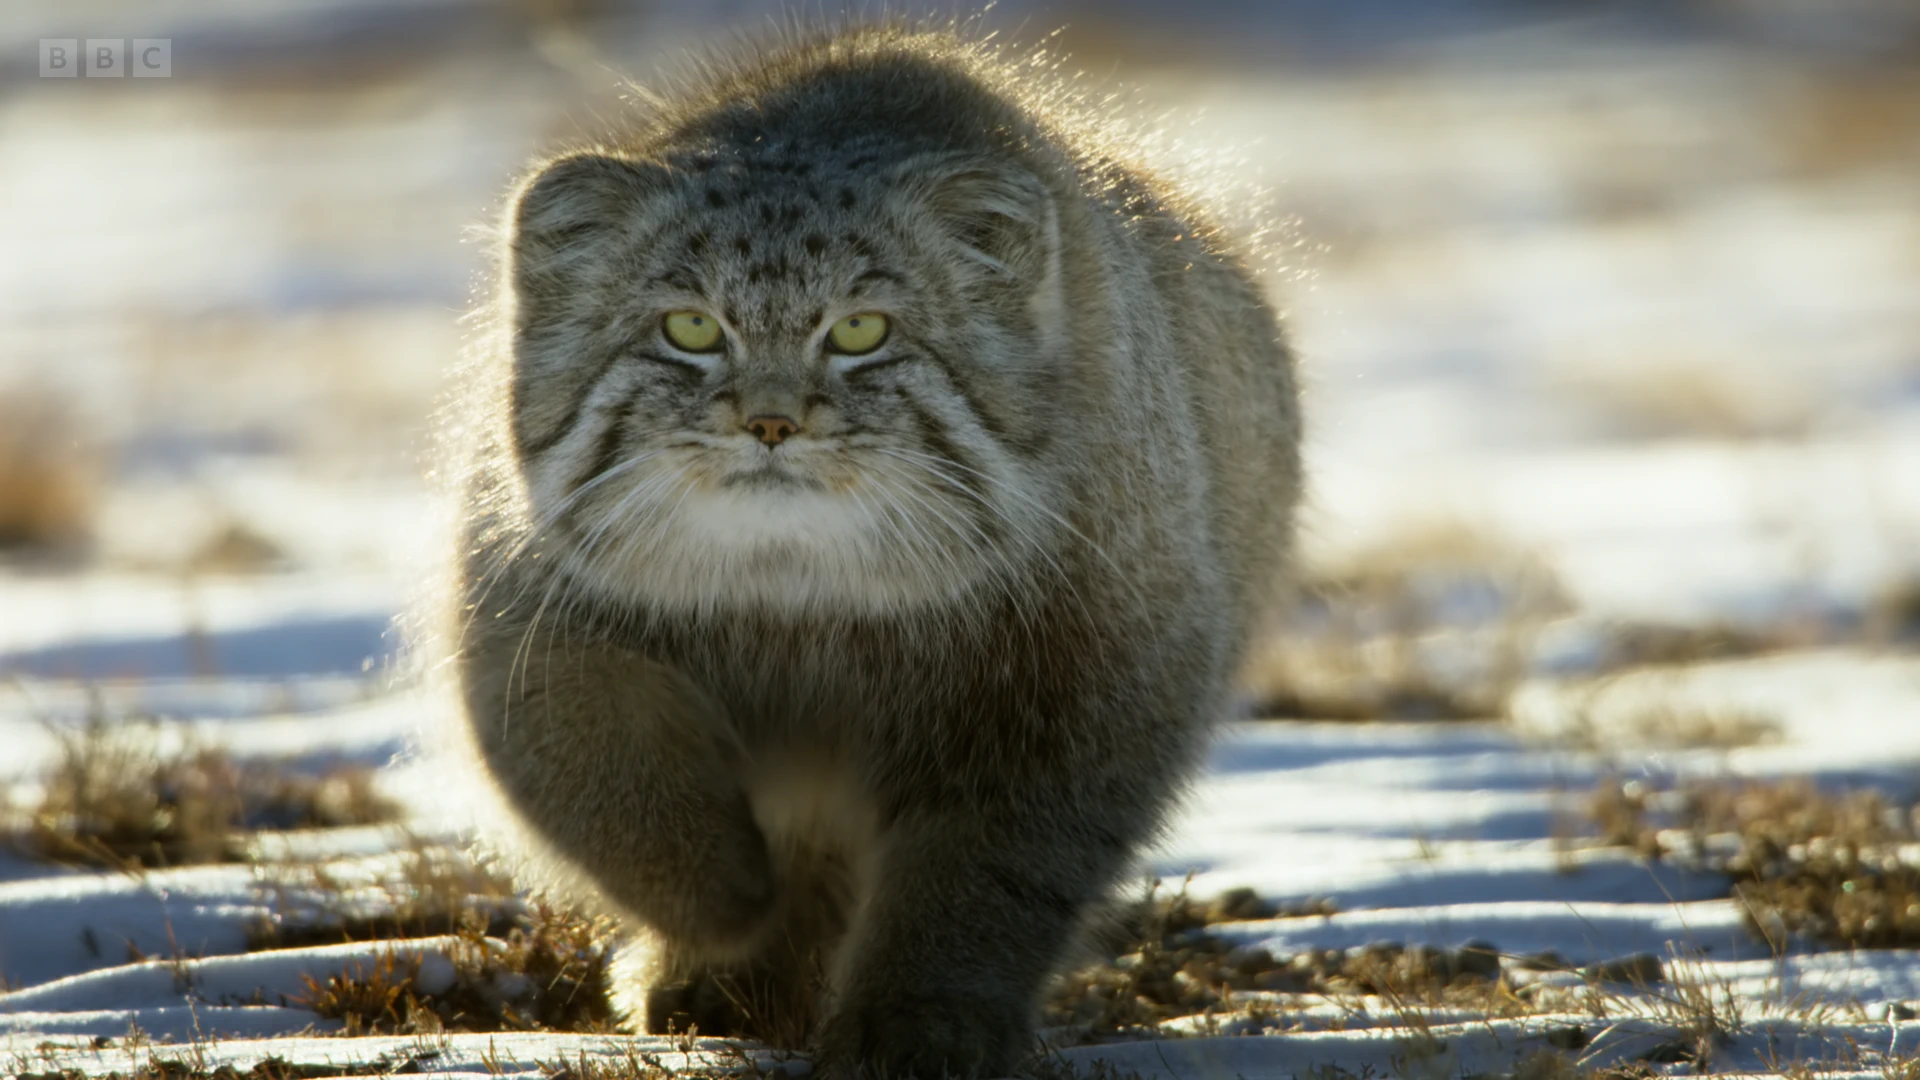 Pallas's cat (Otocolobus manul manul) as shown in Frozen Planet II - Frozen Worlds